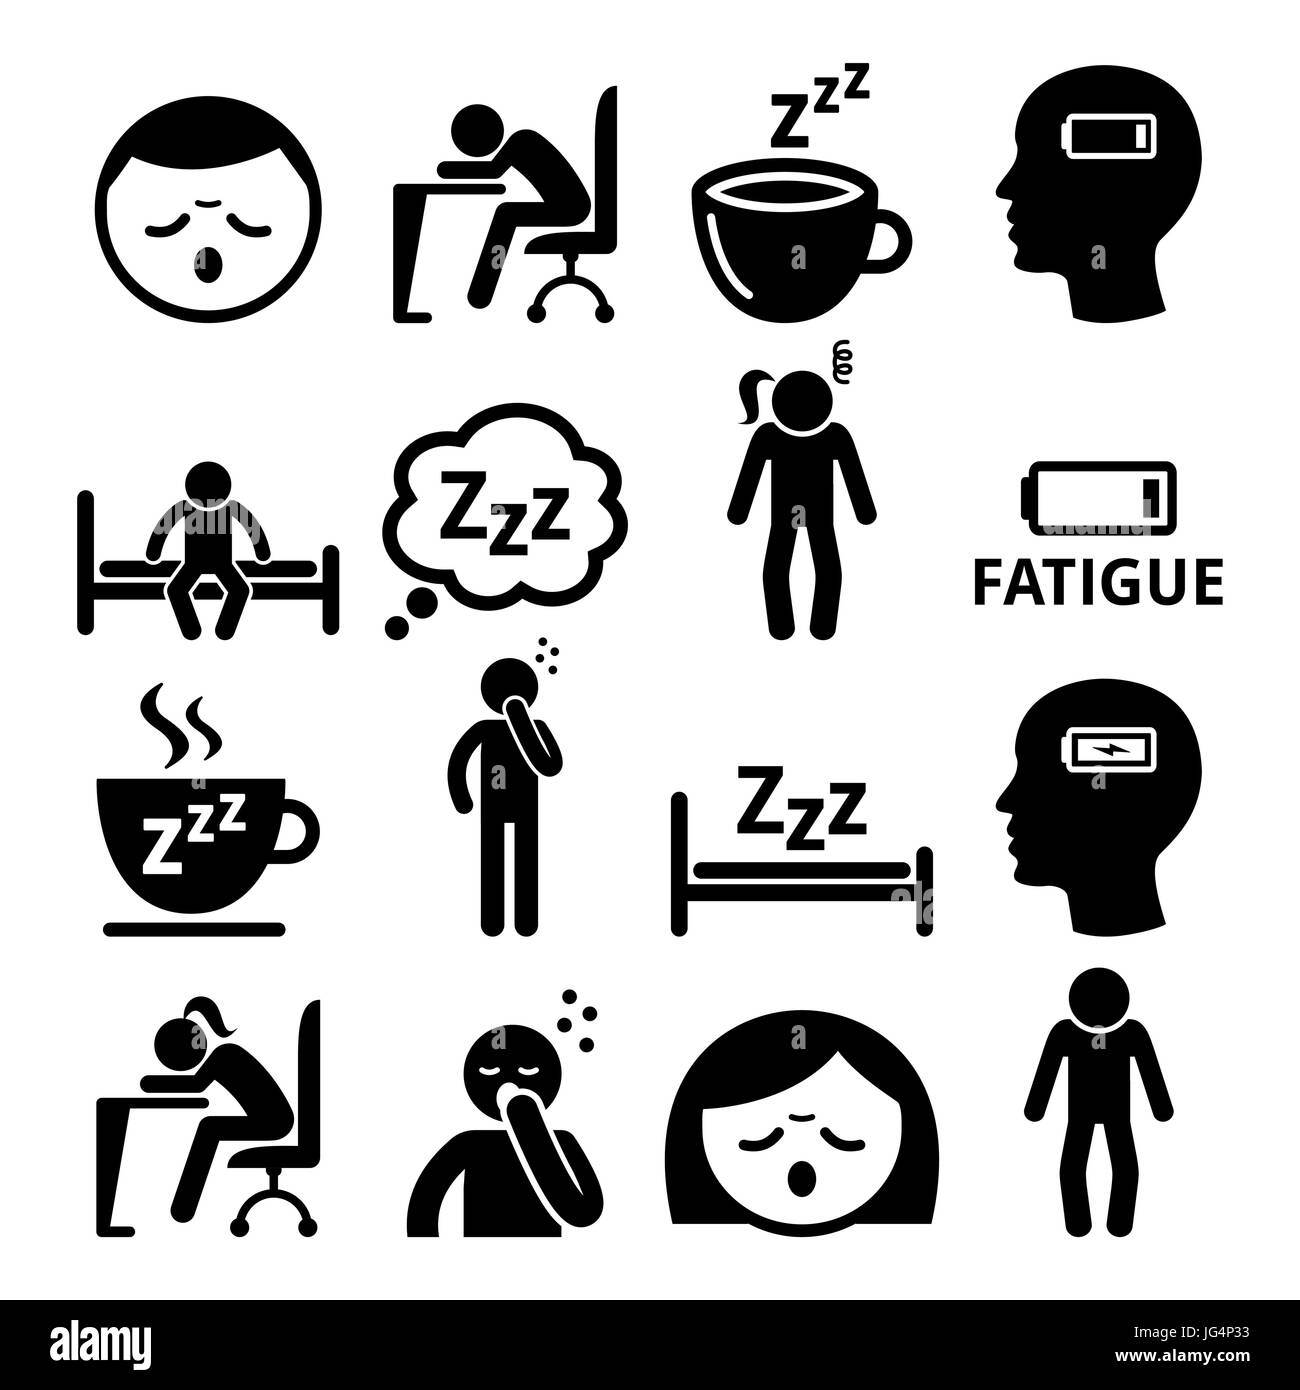 Fatigue icons, tired, sleepy man and woman vector design Stock Vector